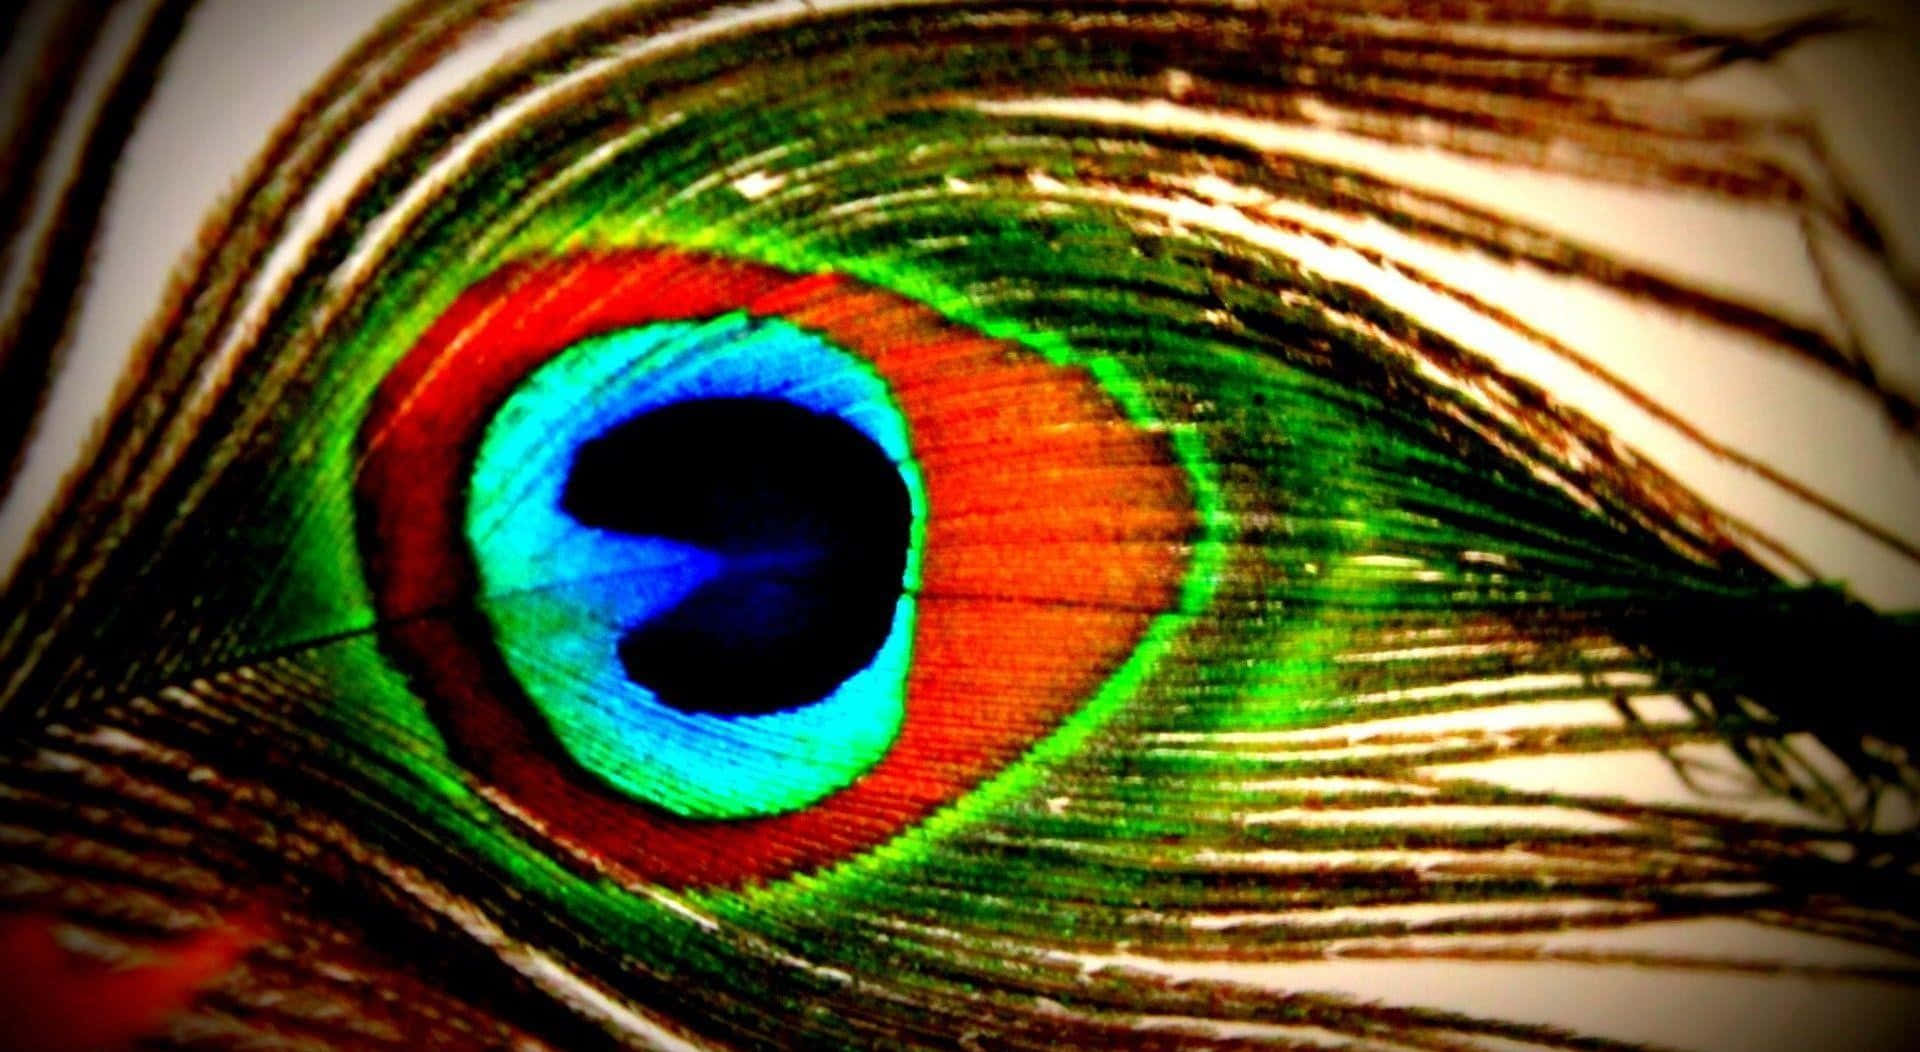 peacock feather desktop background